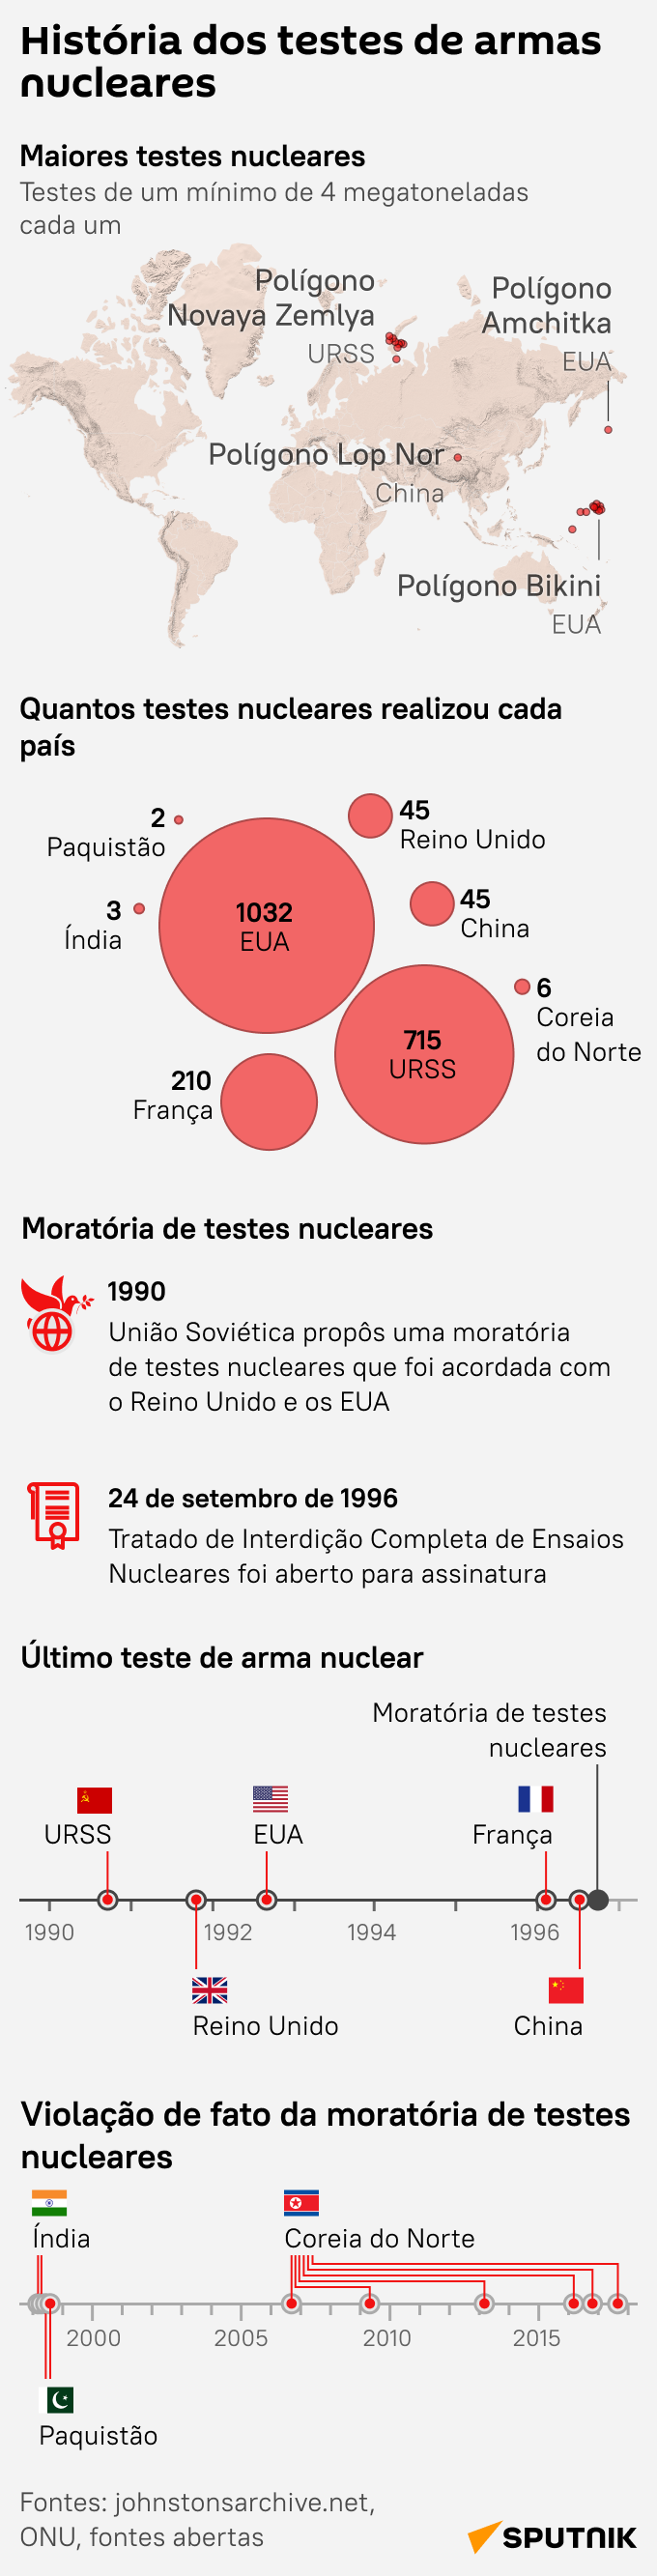 Dia Internacional contra Testes Nucleares: saiba história dos ensaios perigosos e países envolvidos - Sputnik Brasil